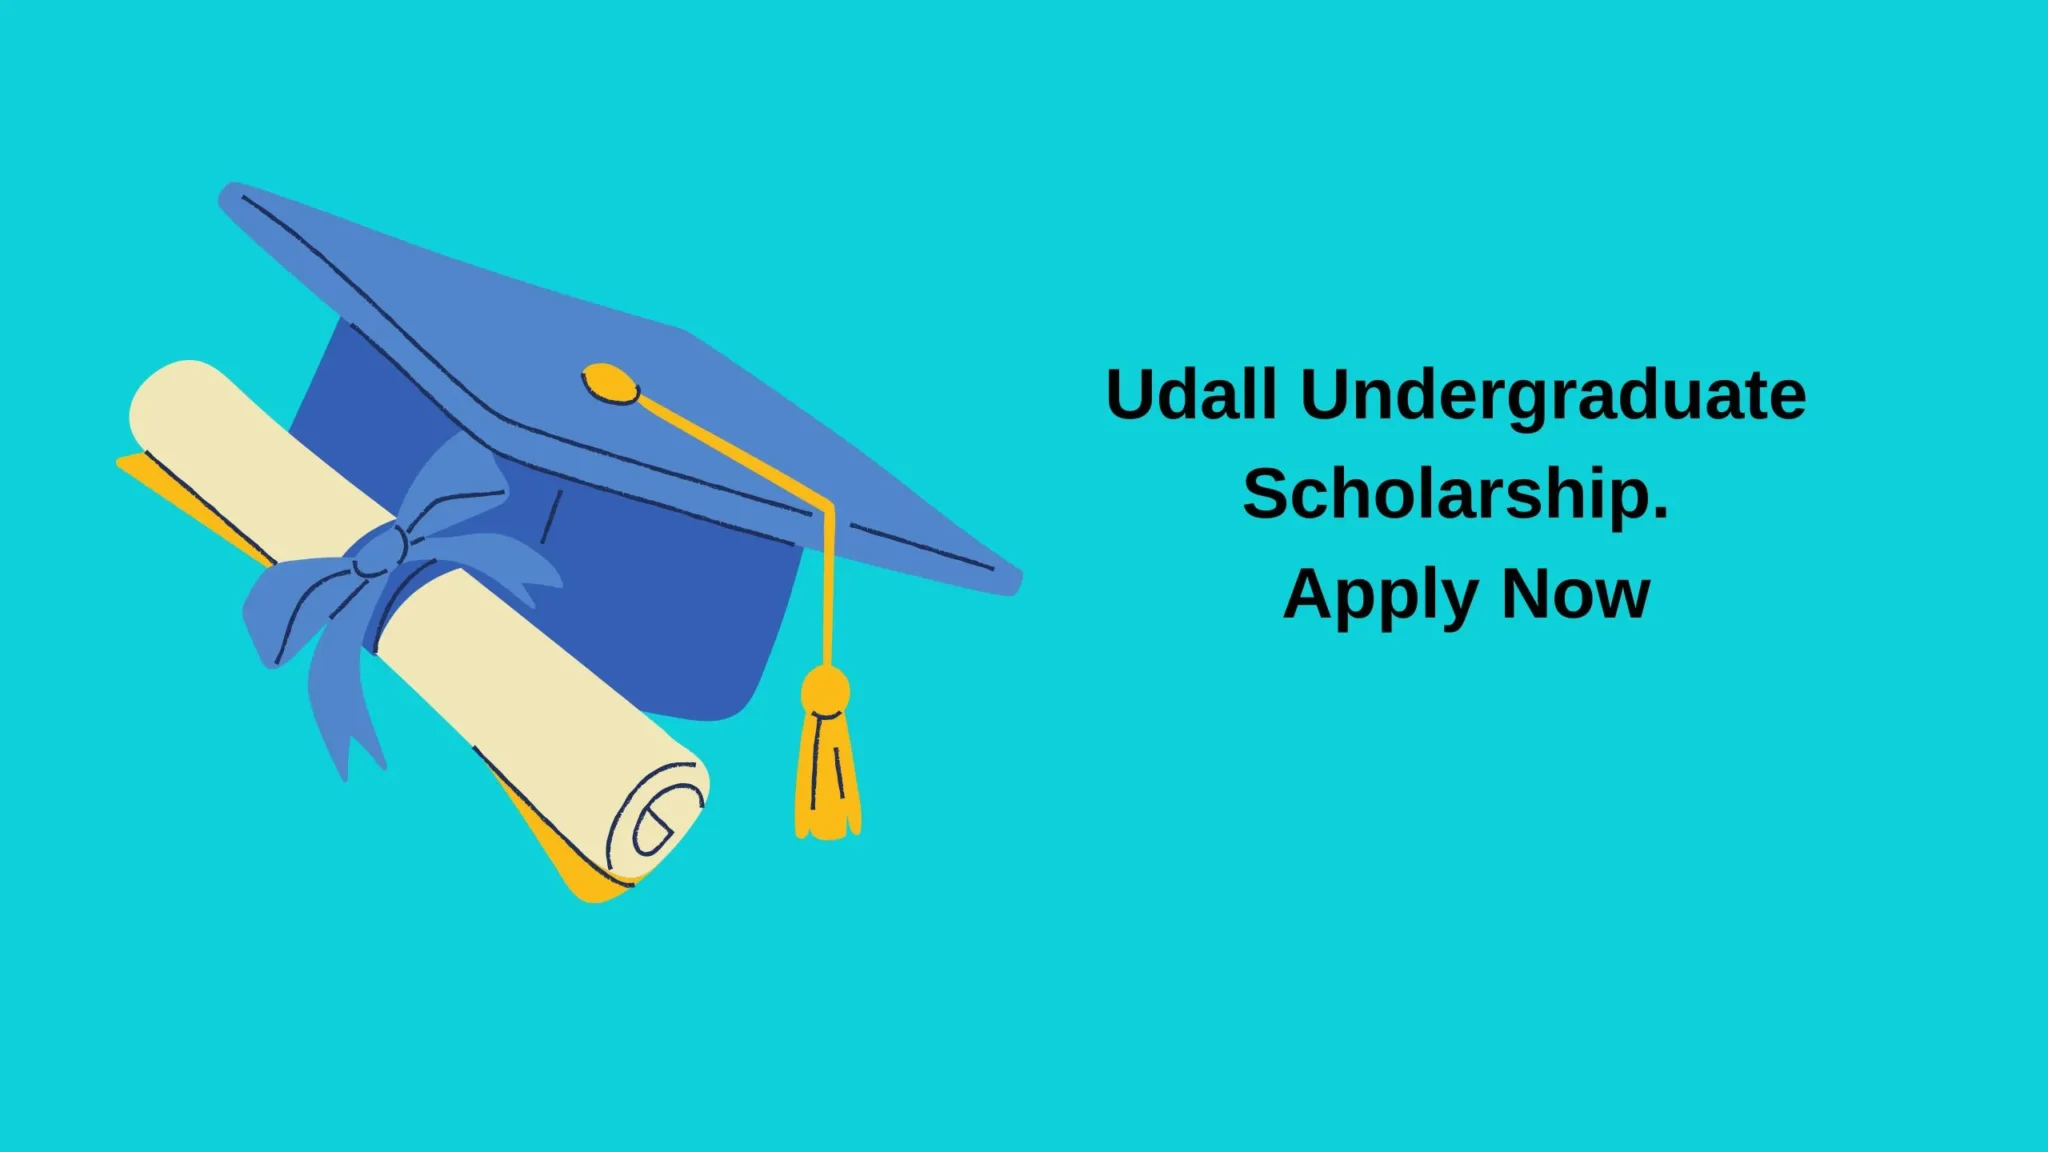 Udall Undergraduate Scholarship. Apply Now